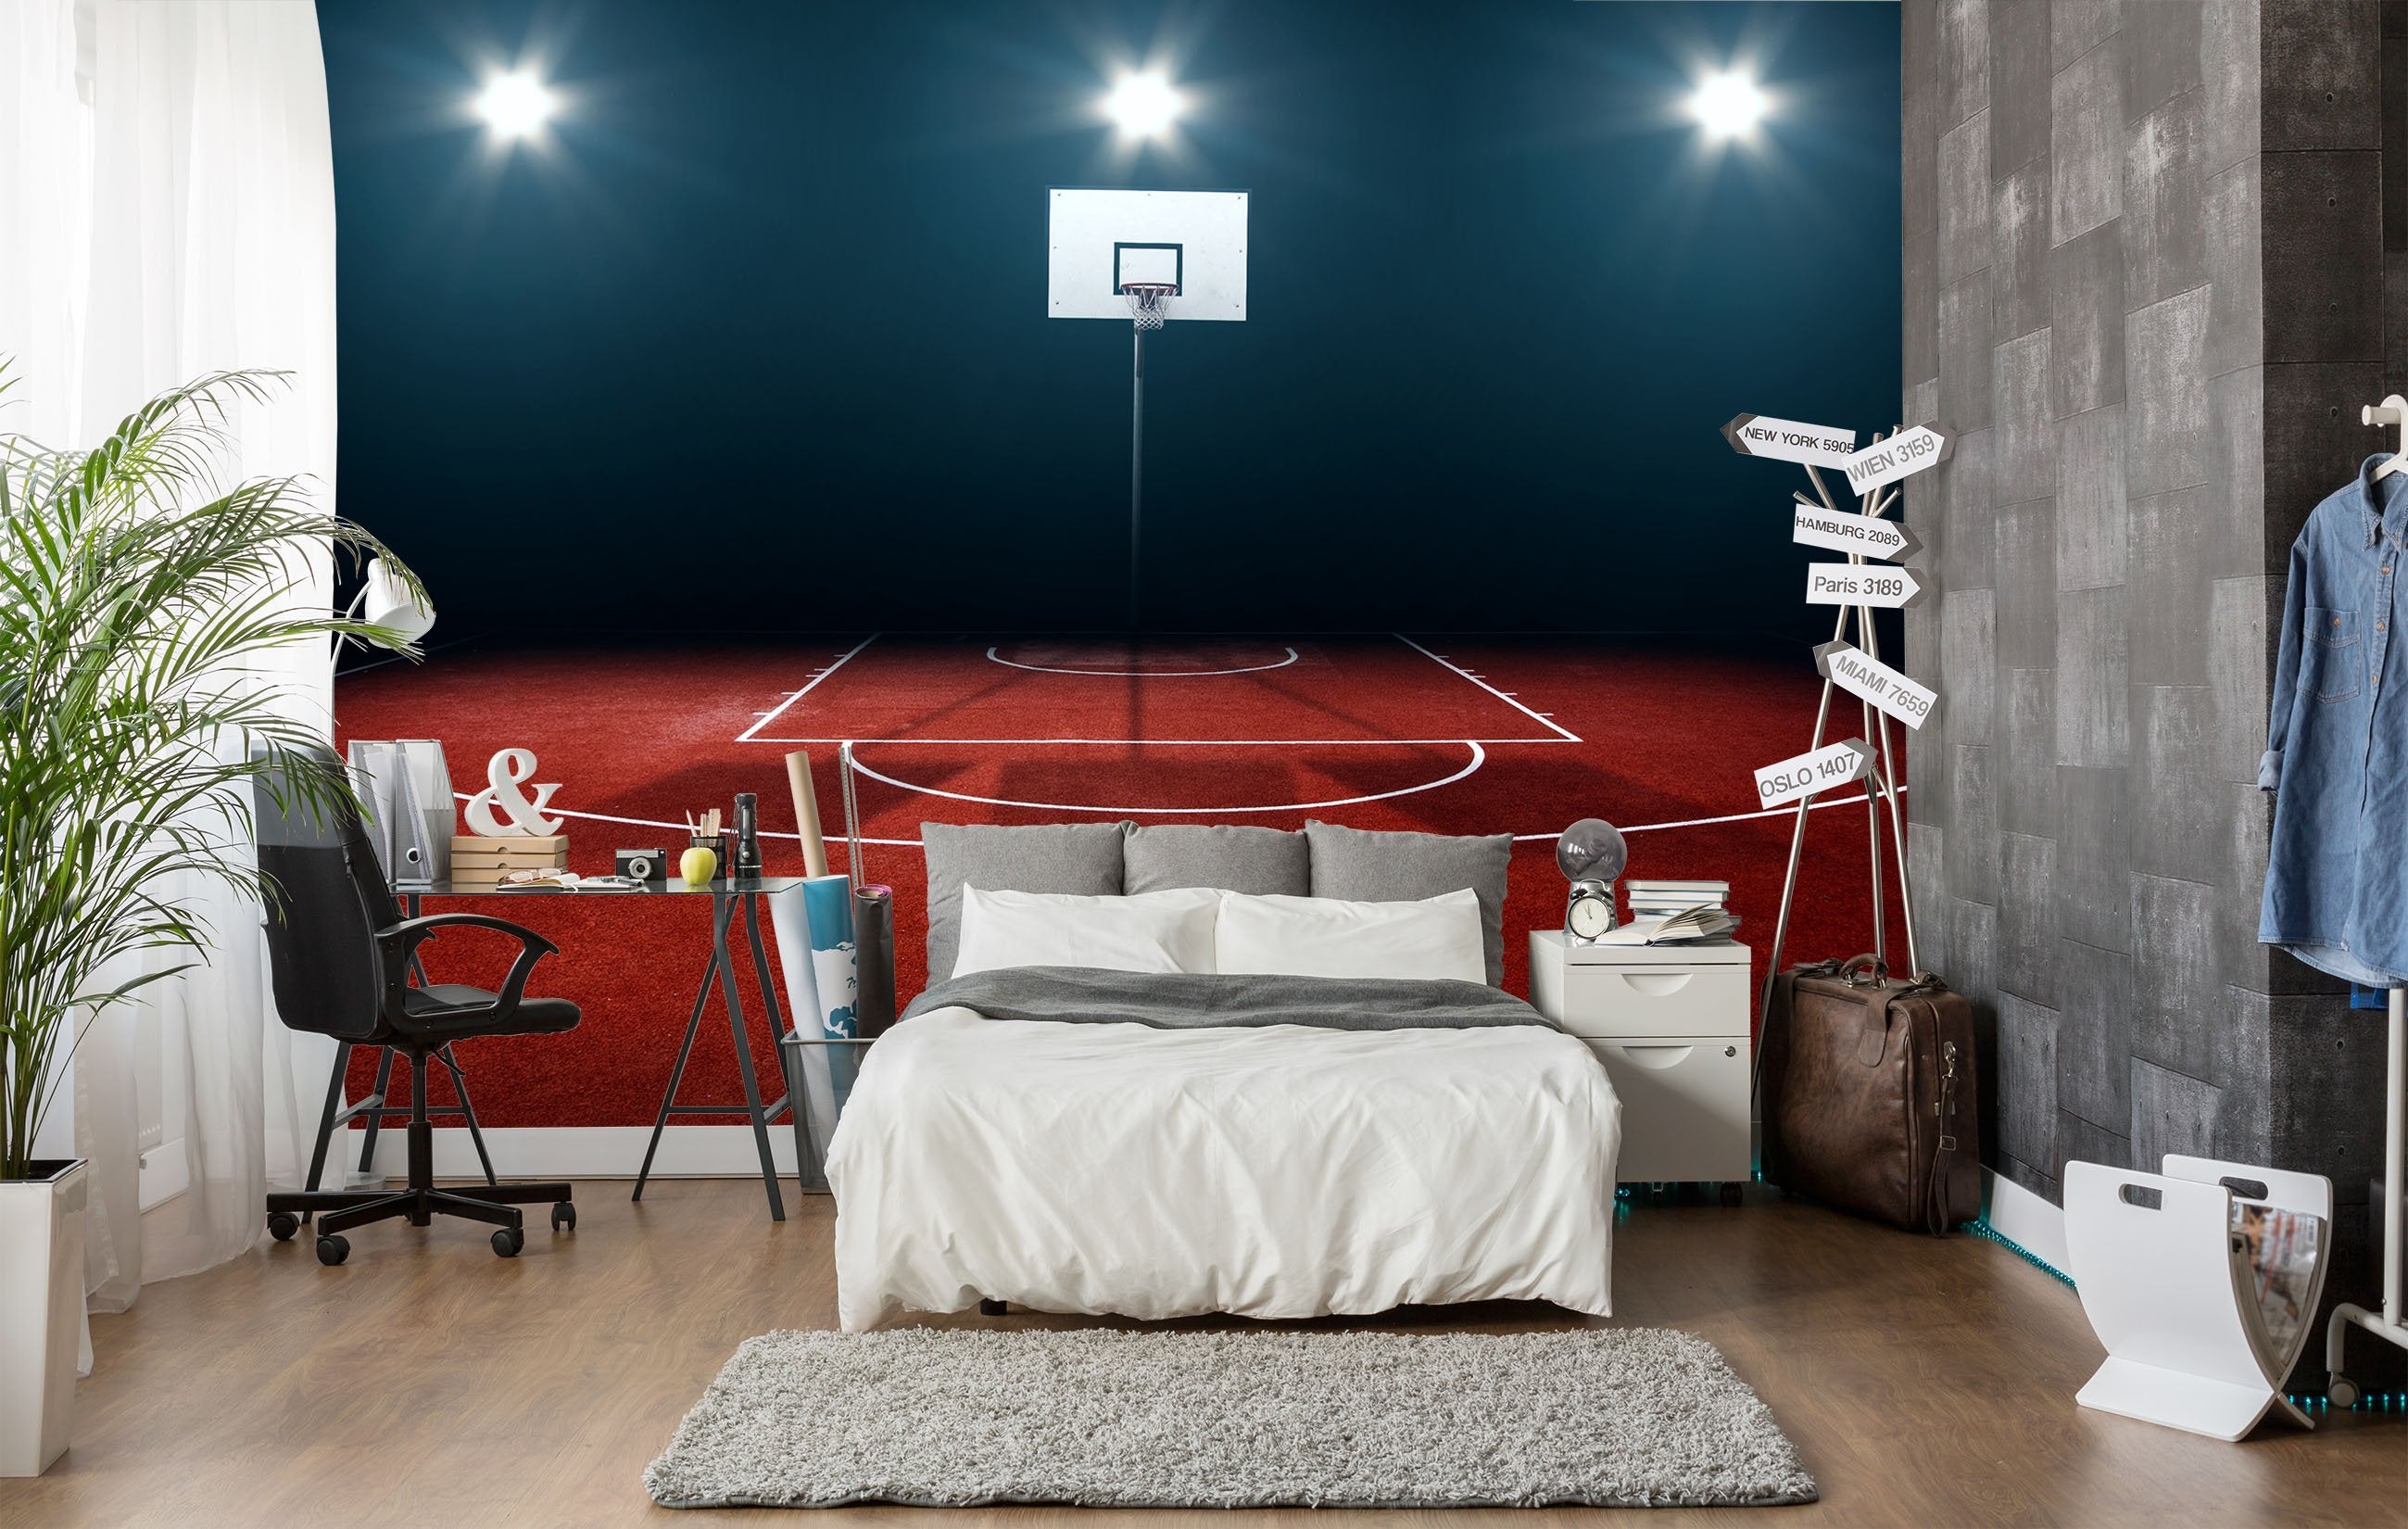 3D Basketball Hoop 019 Wallpaper AJ Wallpaper 